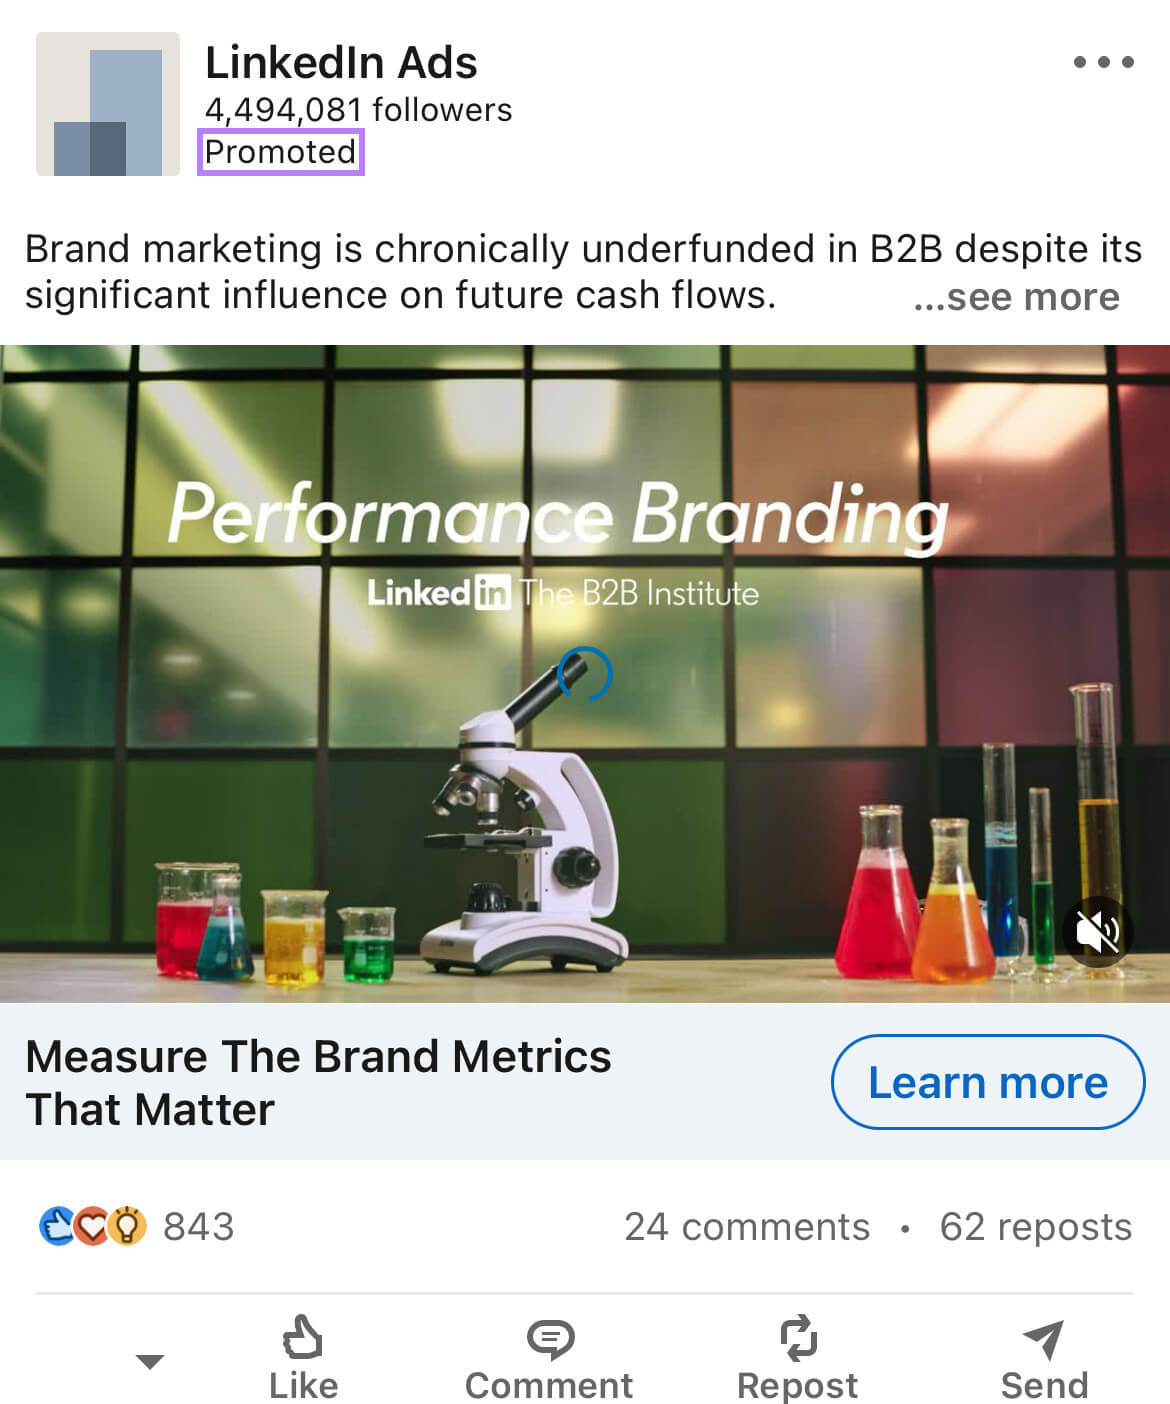 LinkedIn Ads sponsored content on measuring brand metrics that matter